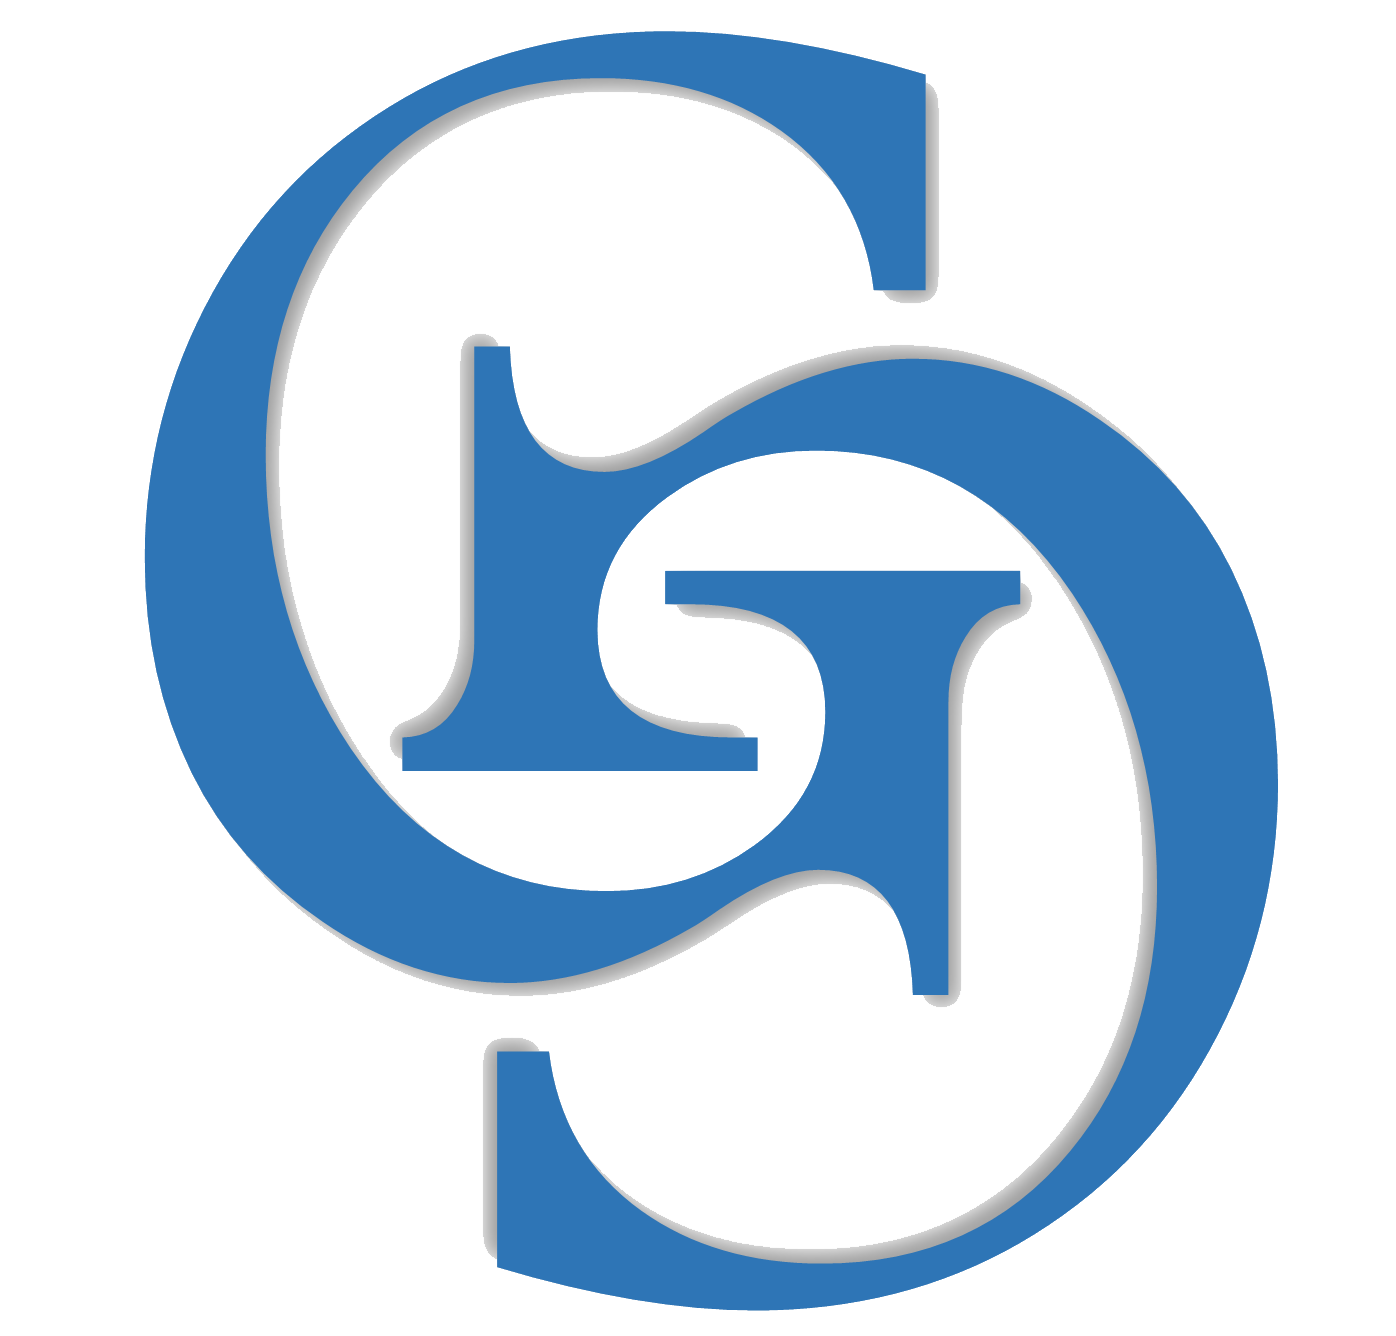 Global Gate Broker Logo